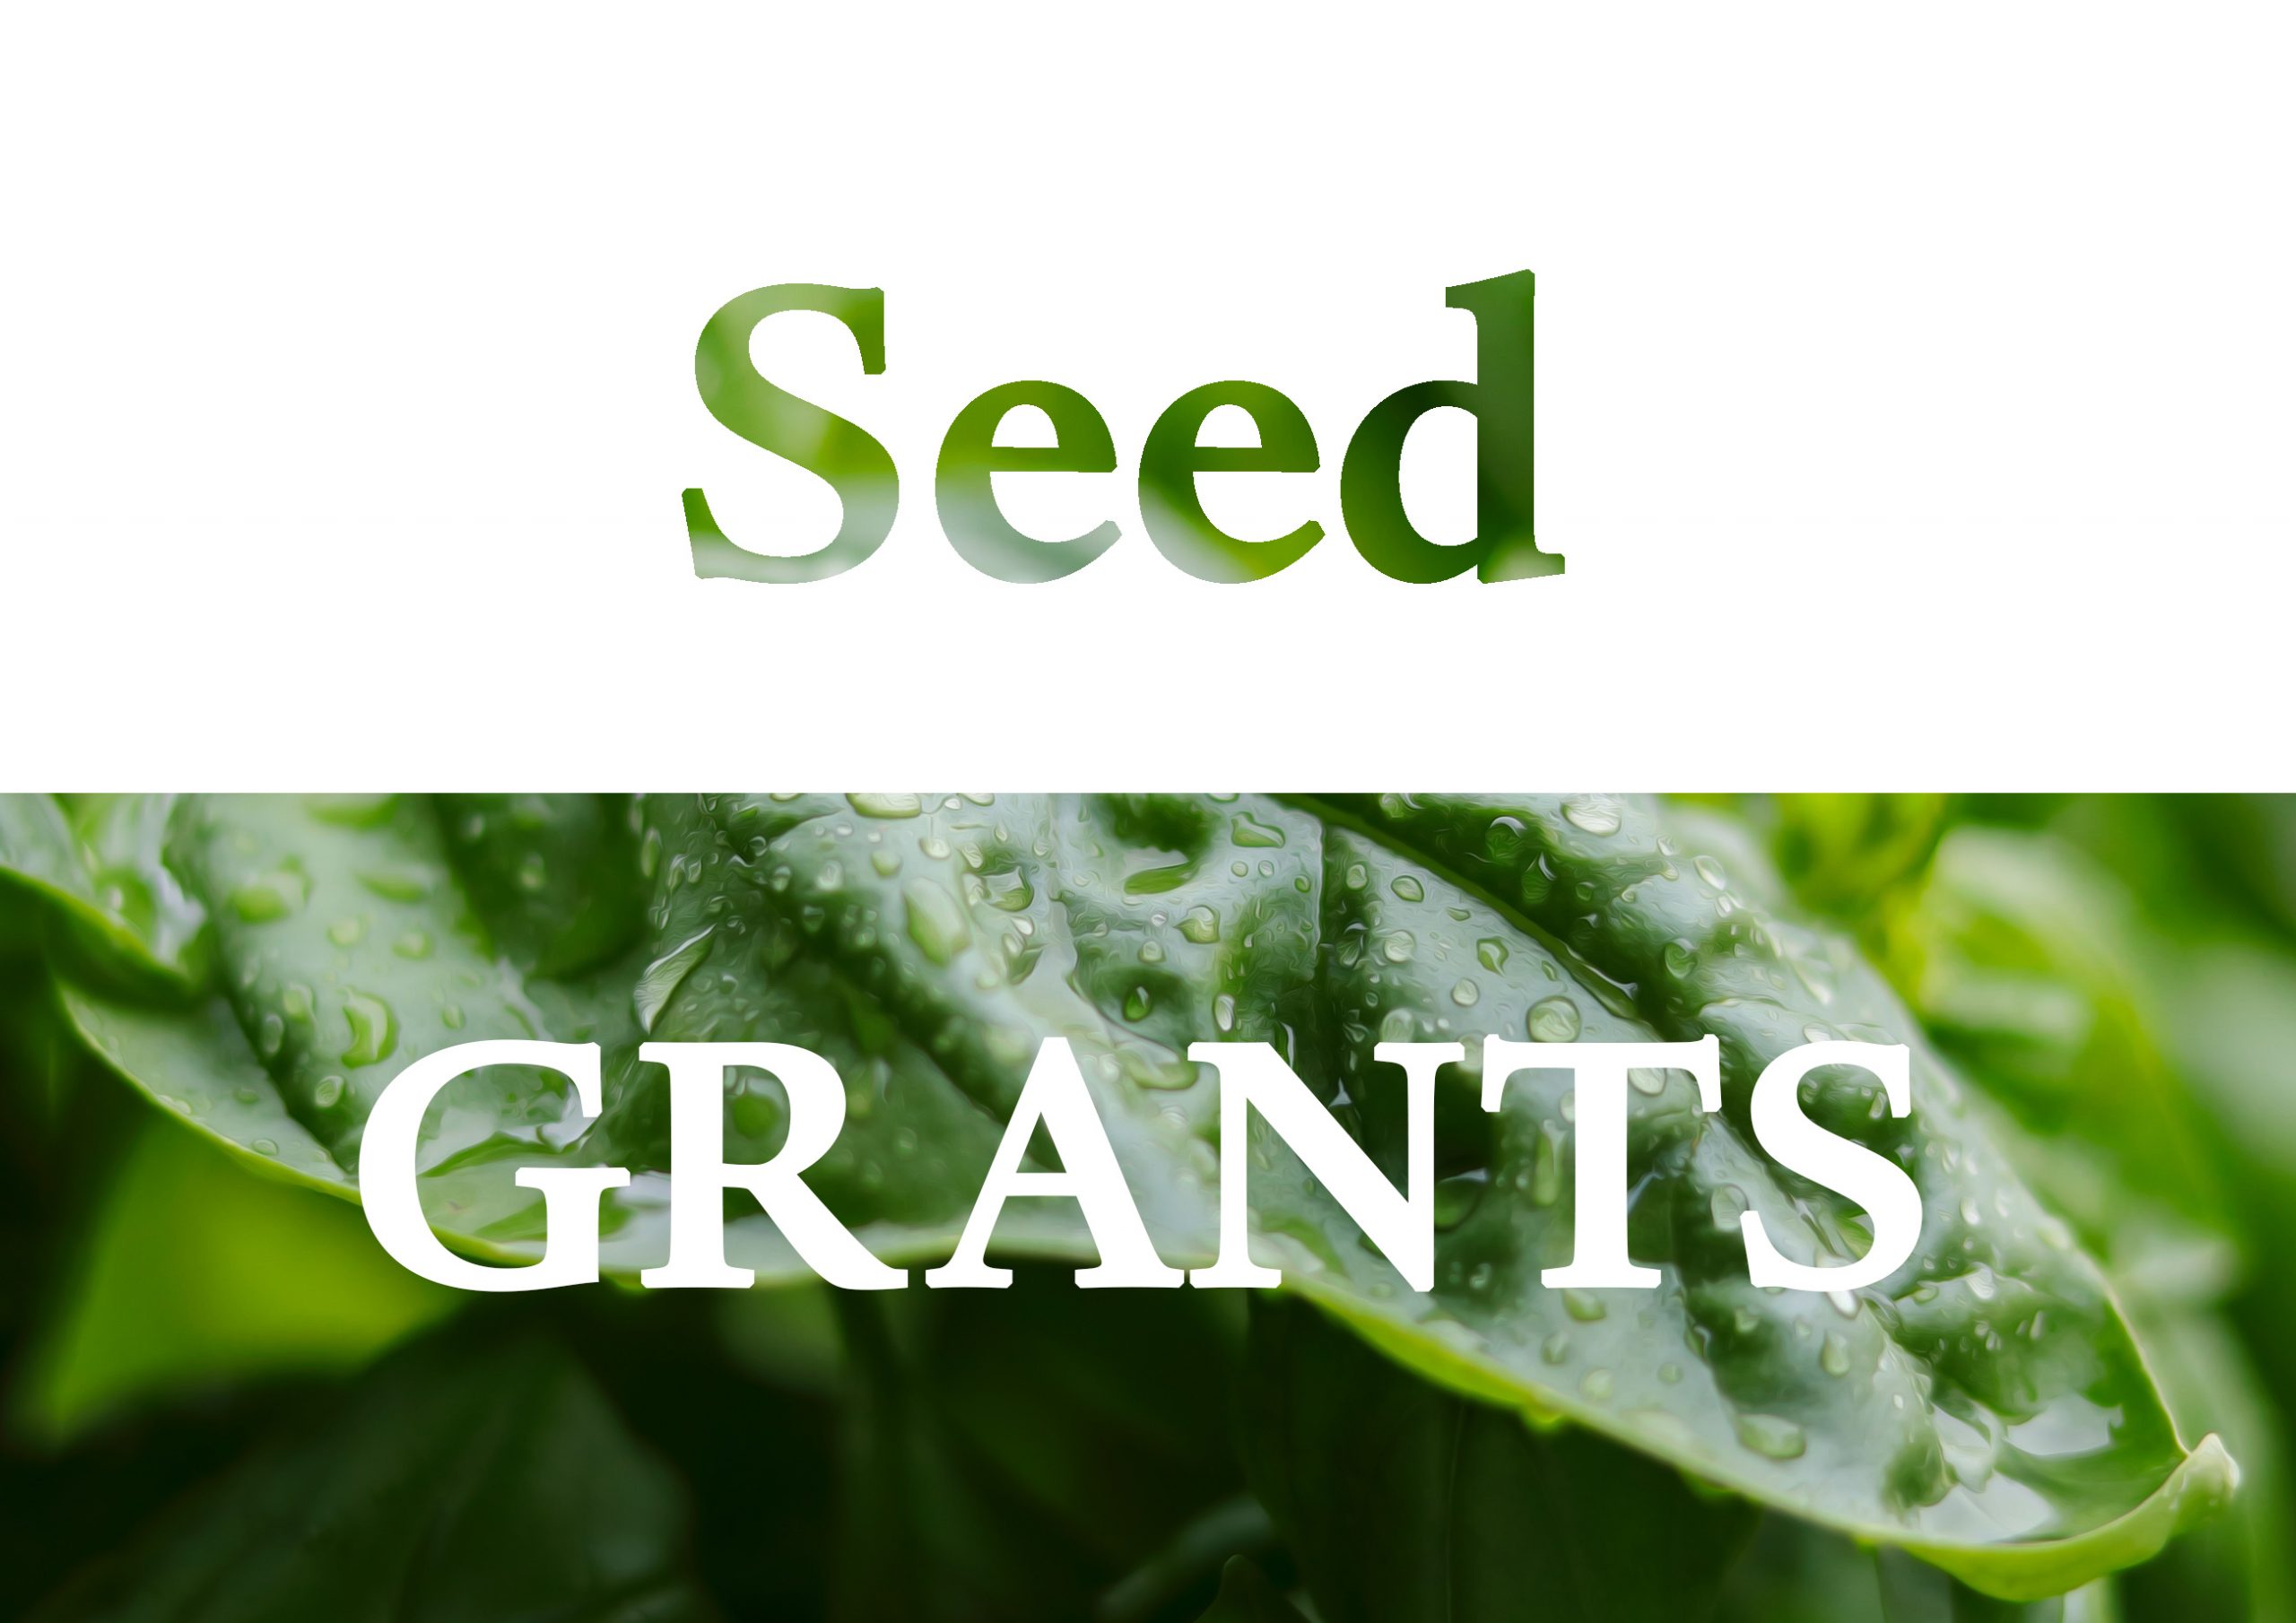 HEAS Seed Grants